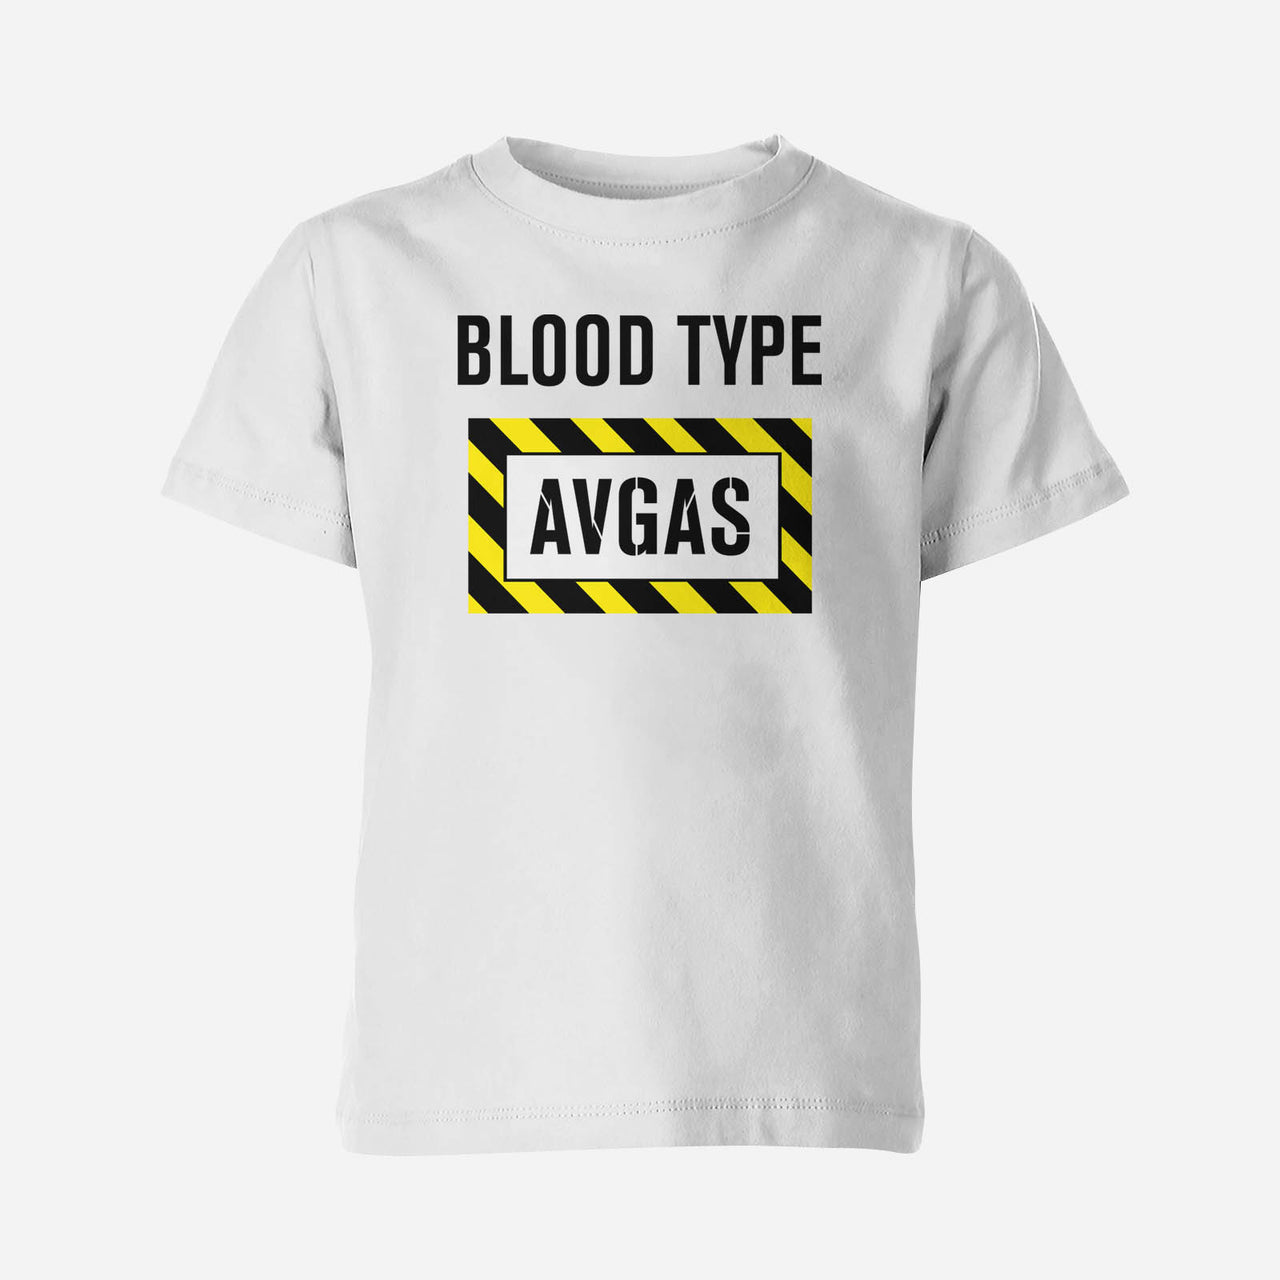 Blood Type AVGAS Designed Children T-Shirts